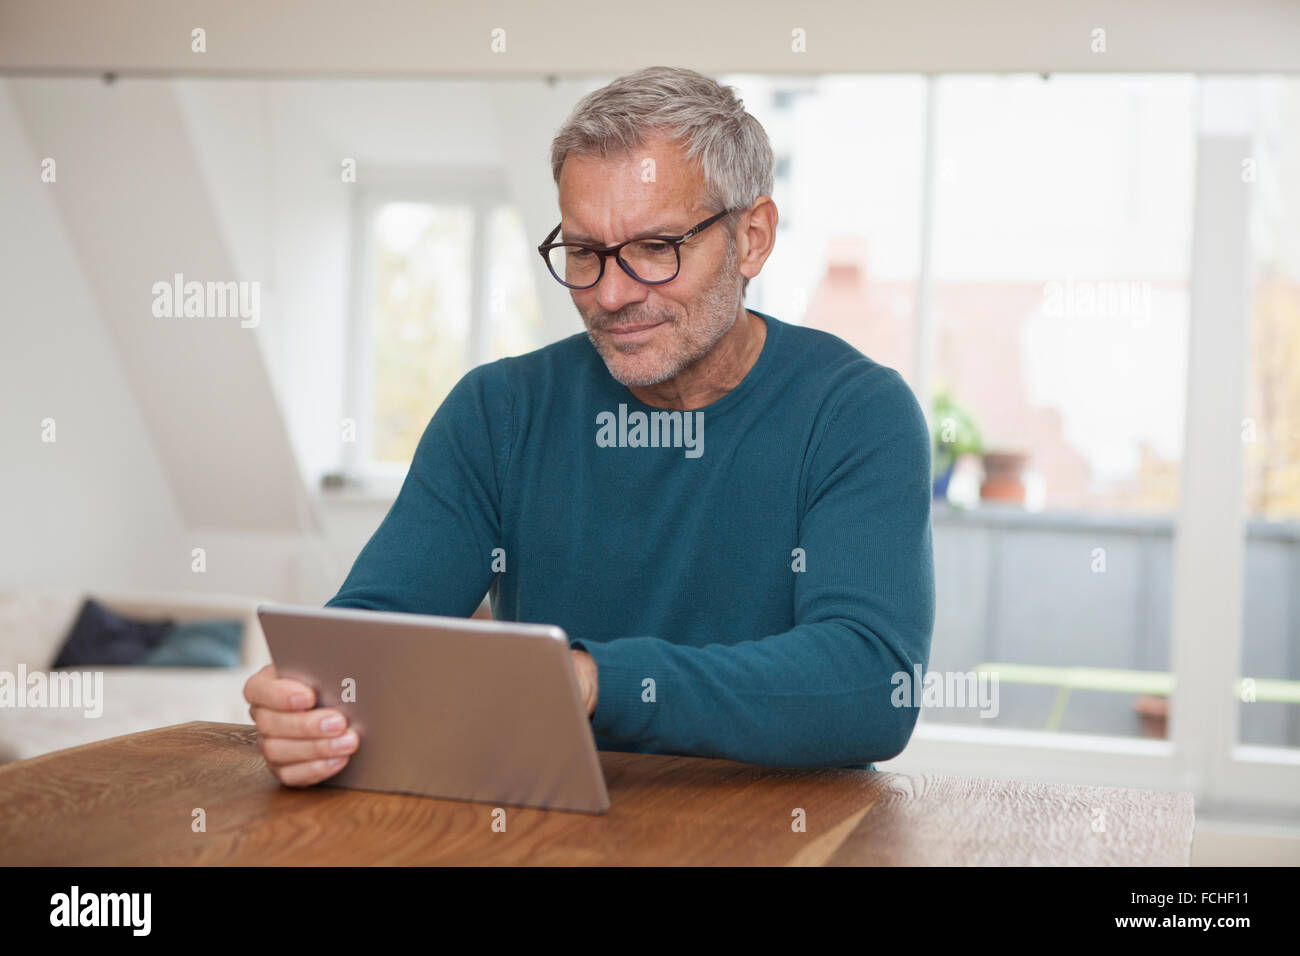 Mature man at home using digital tablet Stock Photo